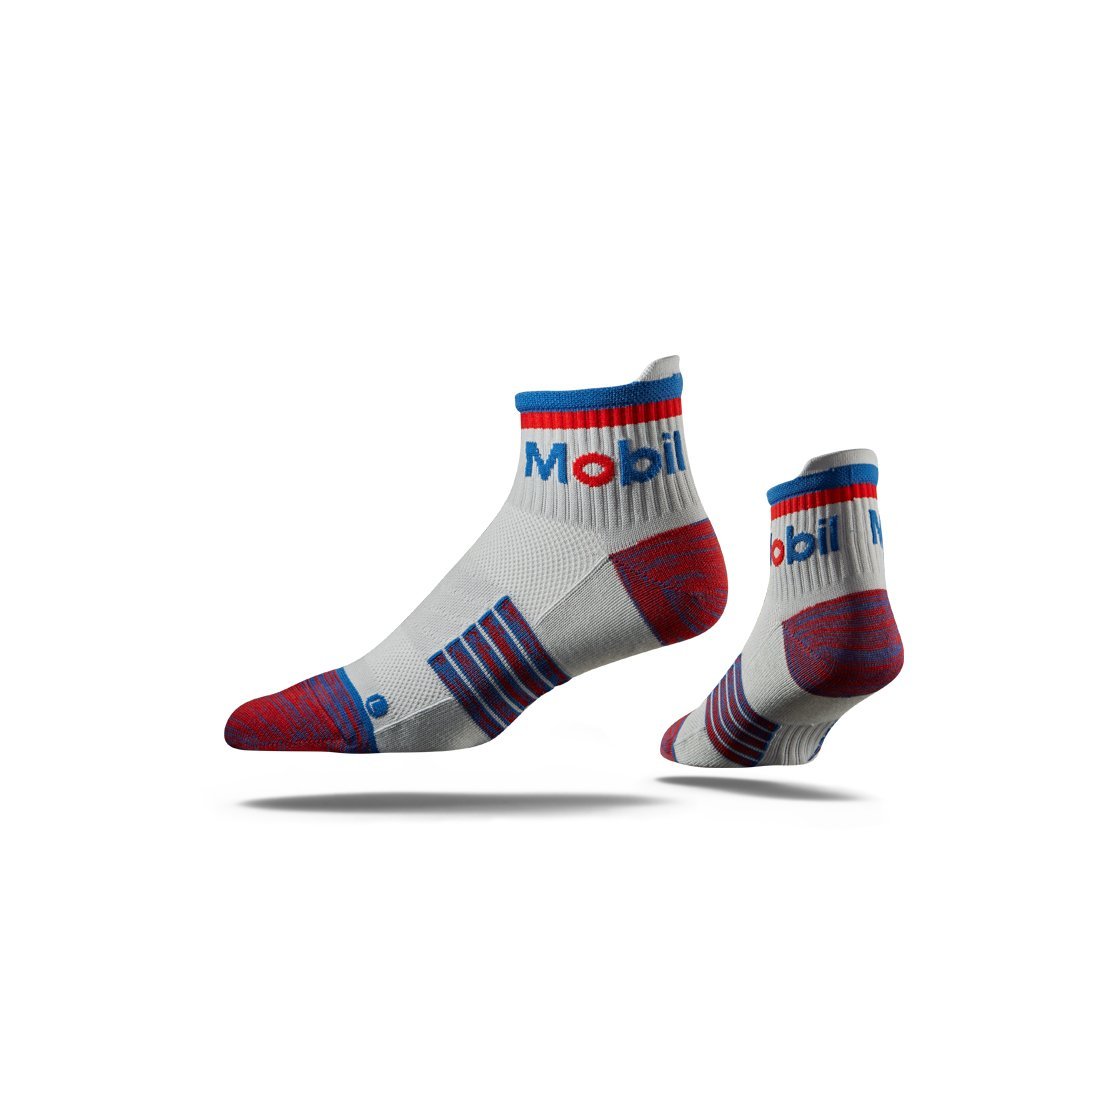 customizable socks provider